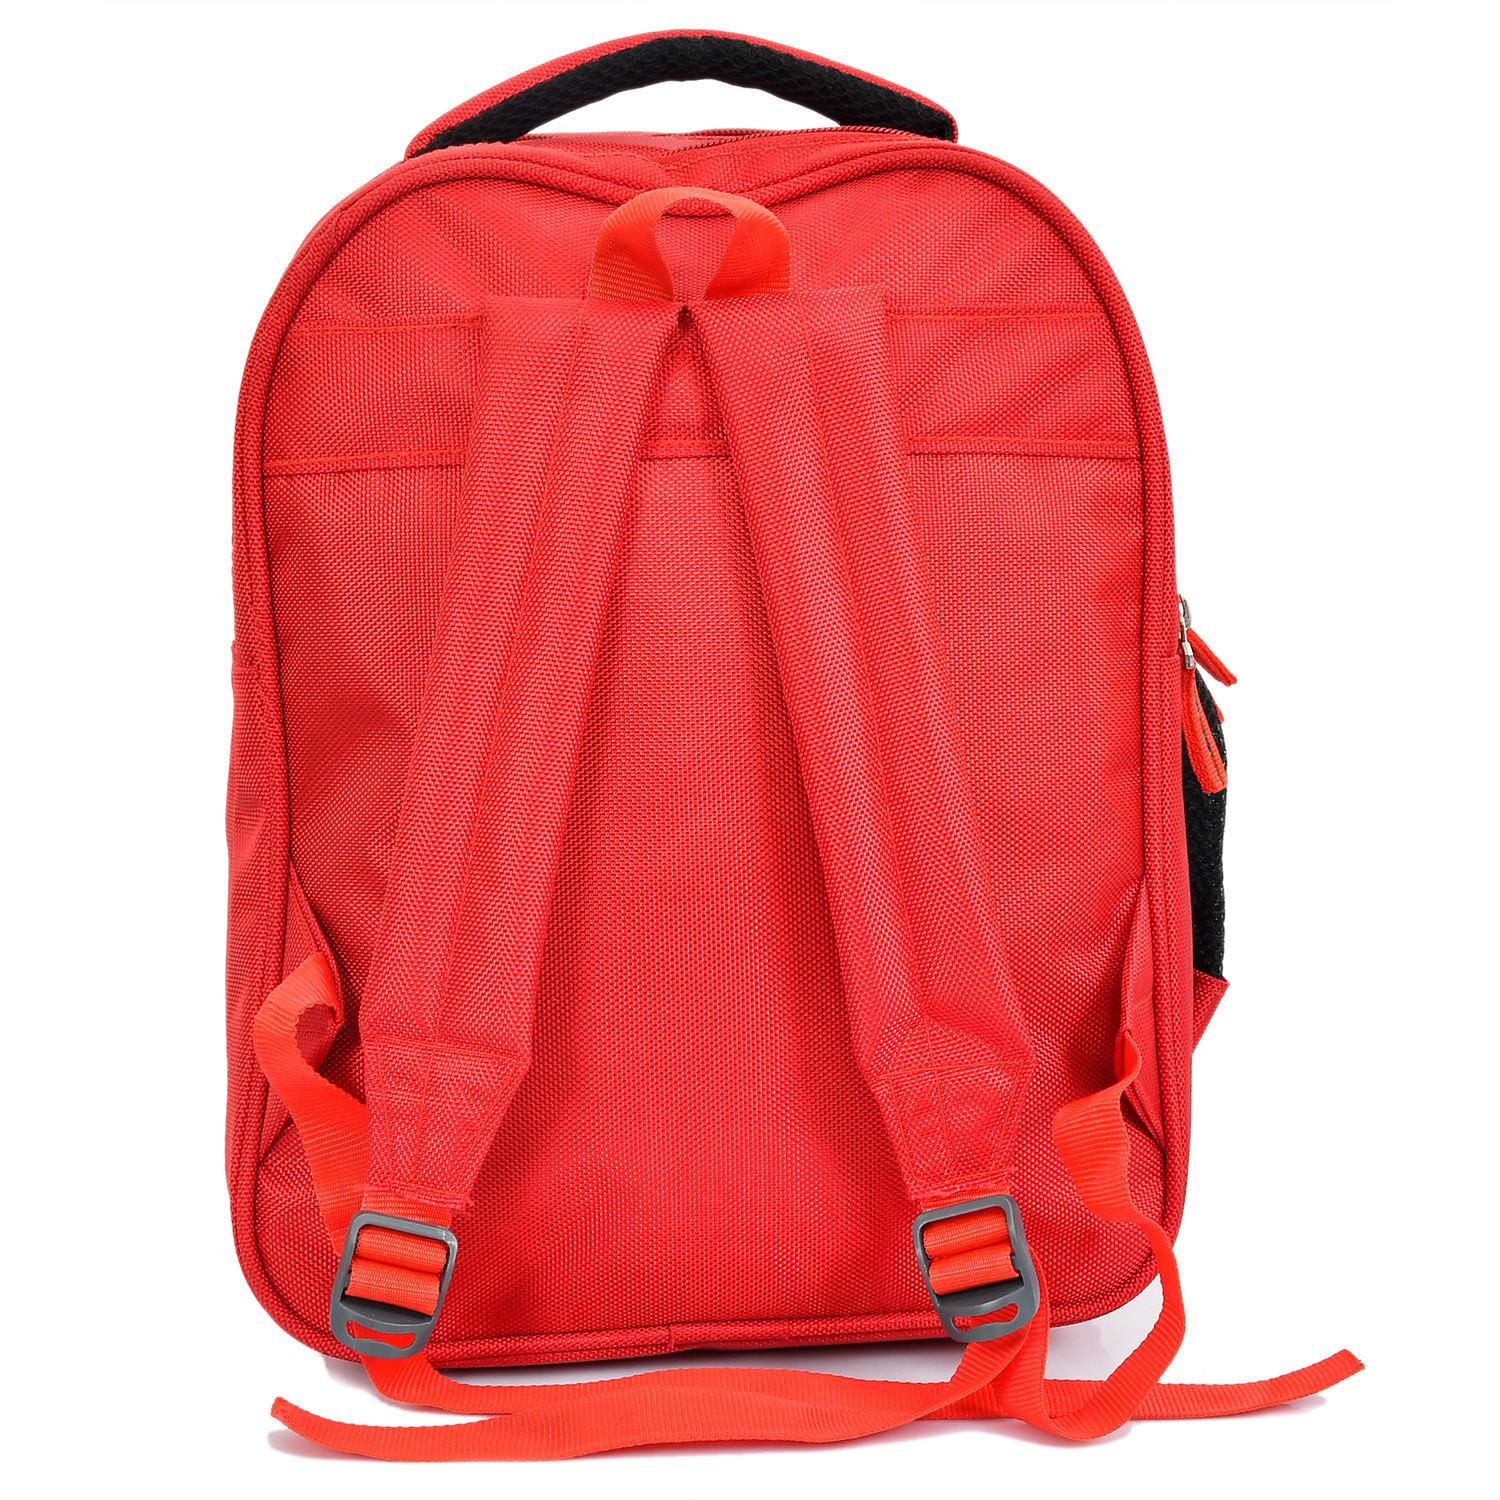 Kuber Industries Fictional Car School Bag | Kids School Bags | Student Bookbag | Spacious School Bag | School Bag for Girls & Boys | School Backpack for Kids | 4 Compartments School Bag | Red